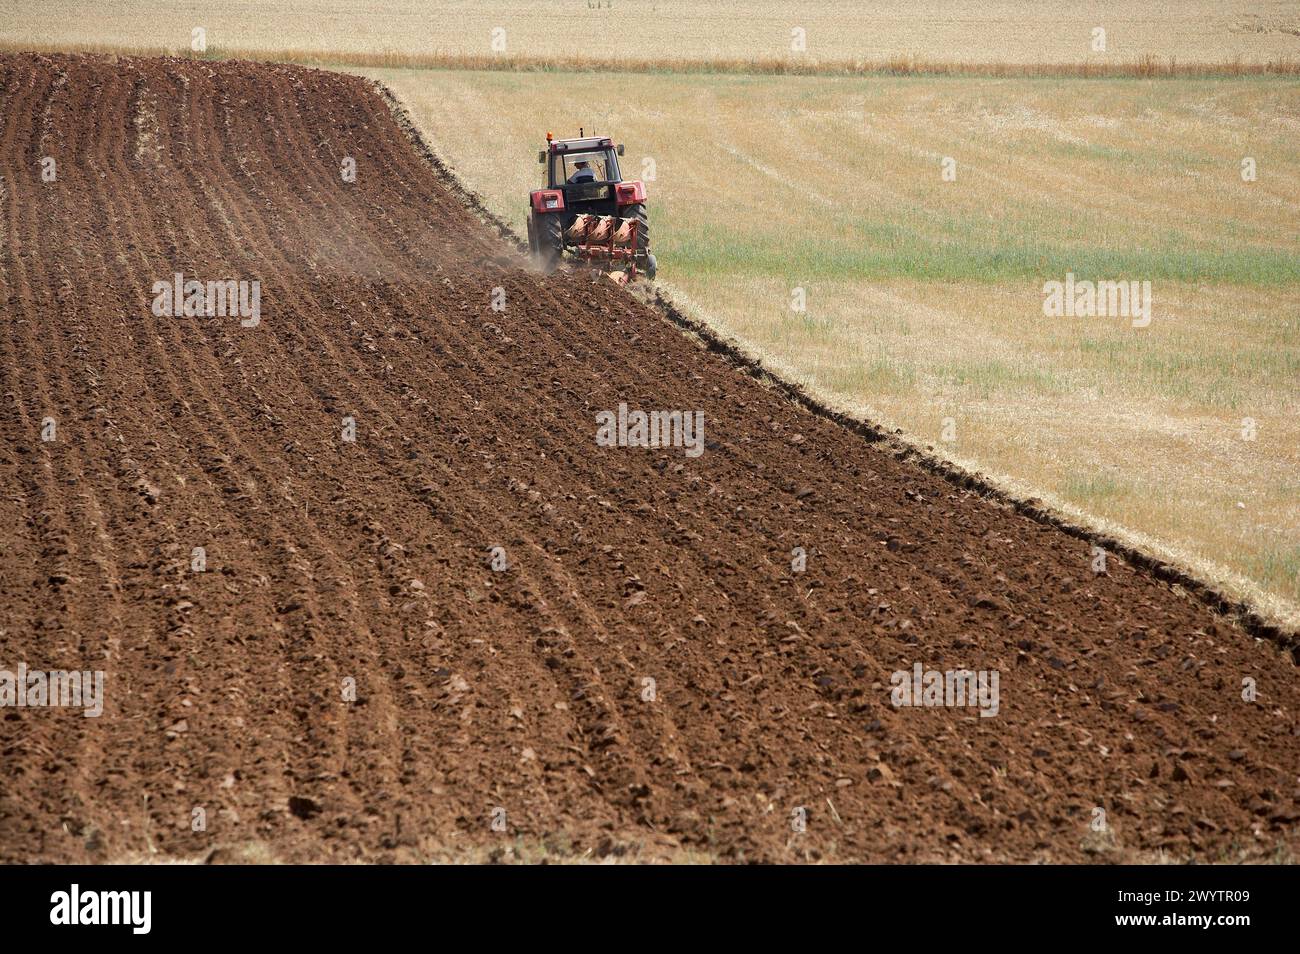 Tractor with mouldboard plough, grain fields, Oco, near Estella, Navarra, Spain. Stock Photo